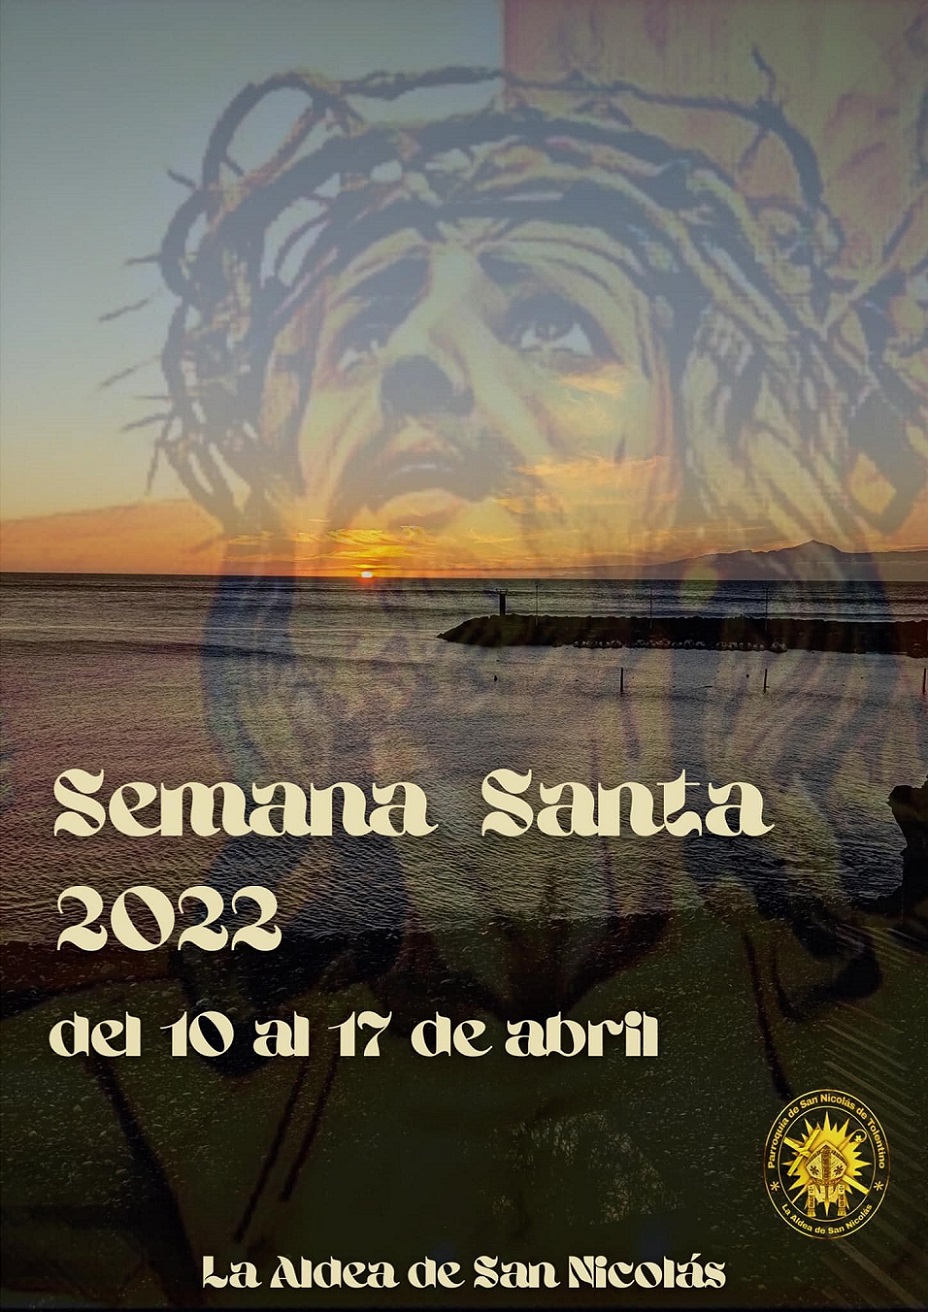  CARTELES  SEMANA  SANTA  2022  (II) - Página 2 Zzz_la35